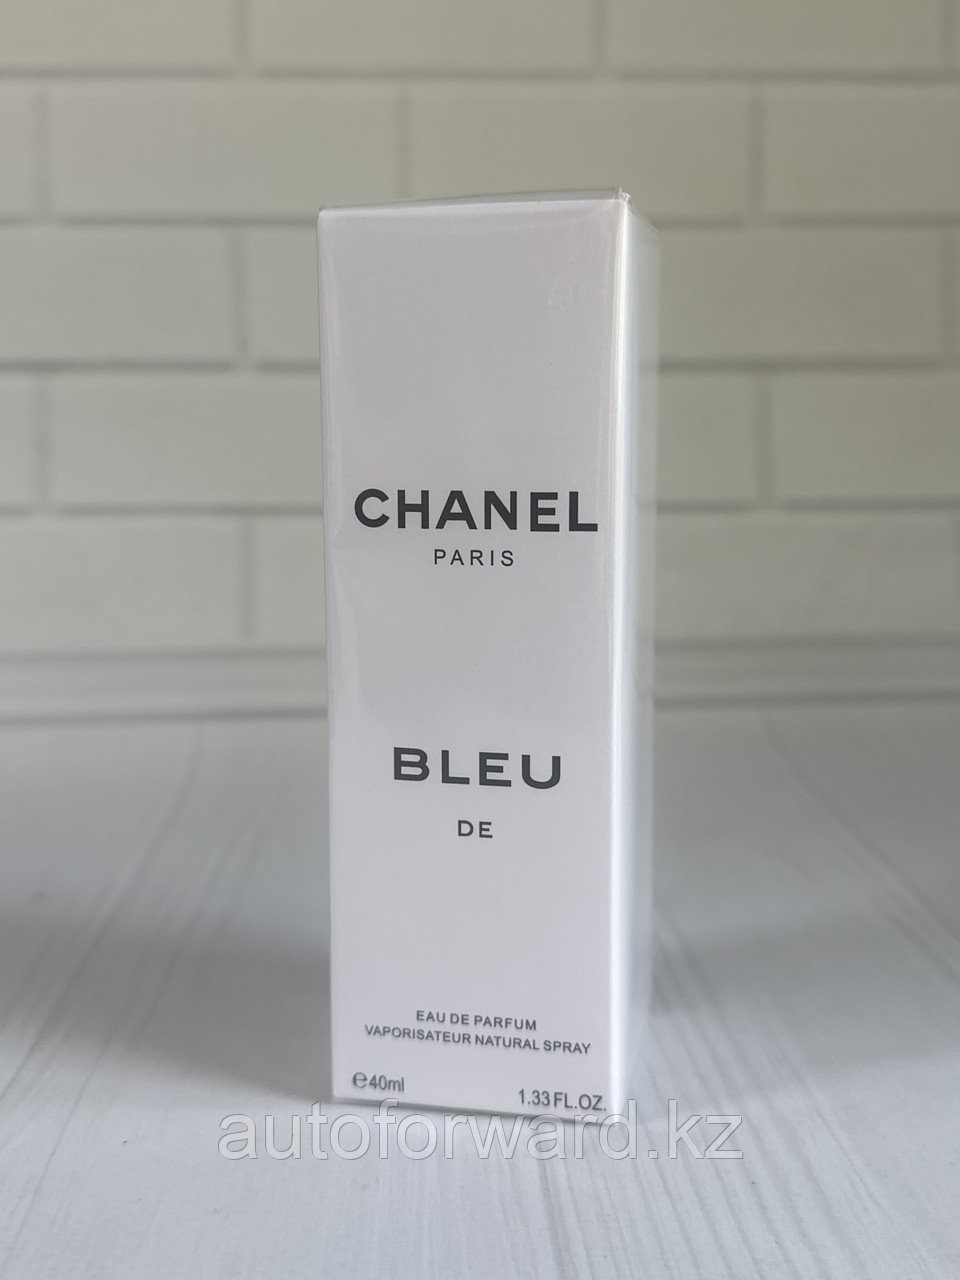 BLEU de Chanel Тестер LUX 40 мл